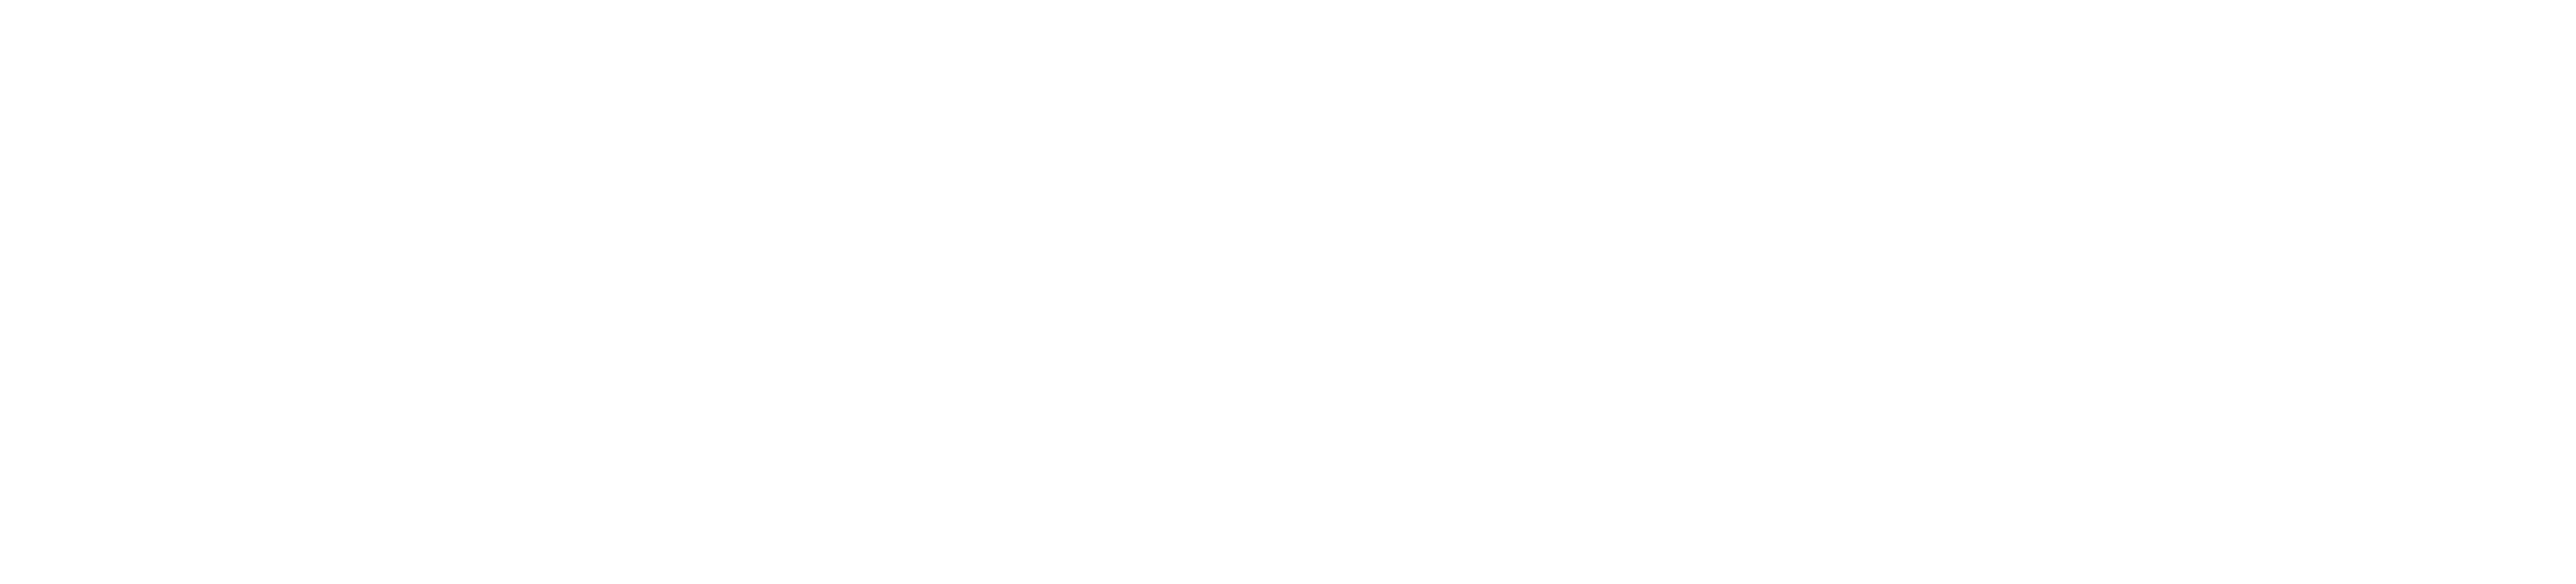 Jewish Federation of Omaha